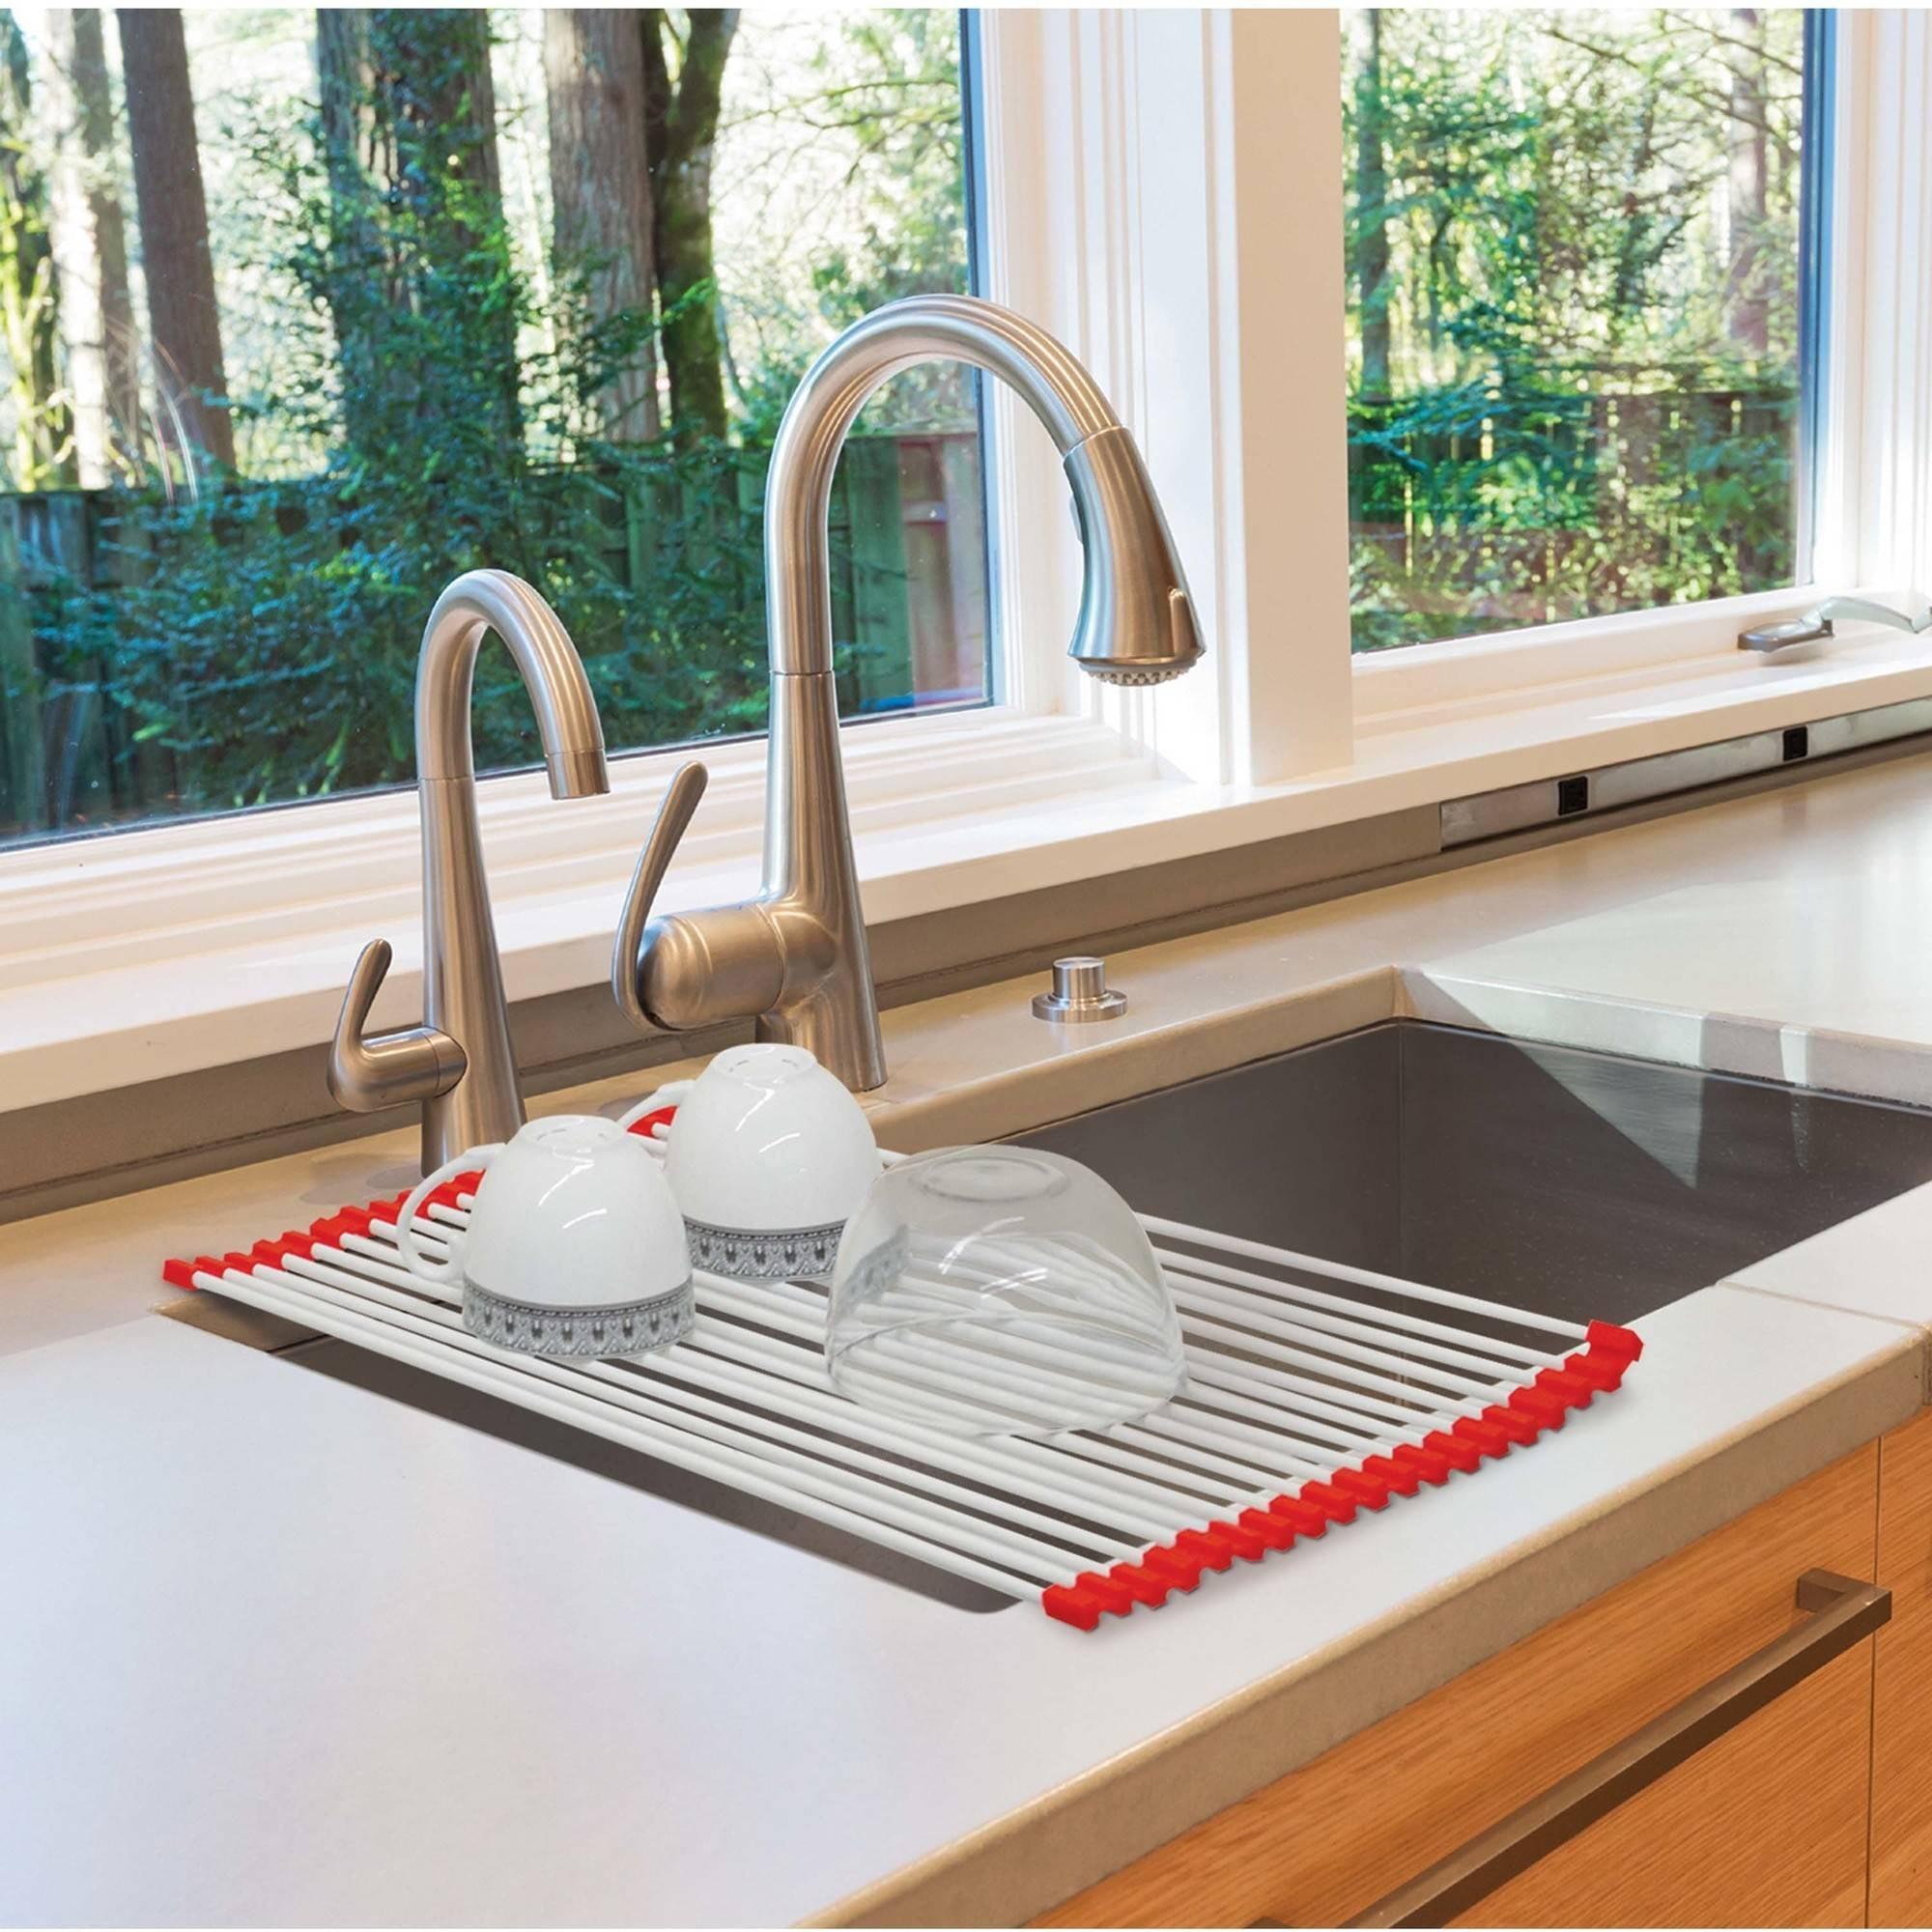 Corashan Kitchen Gadgets,Roll Up Dish Drying Rack Foldable Sink